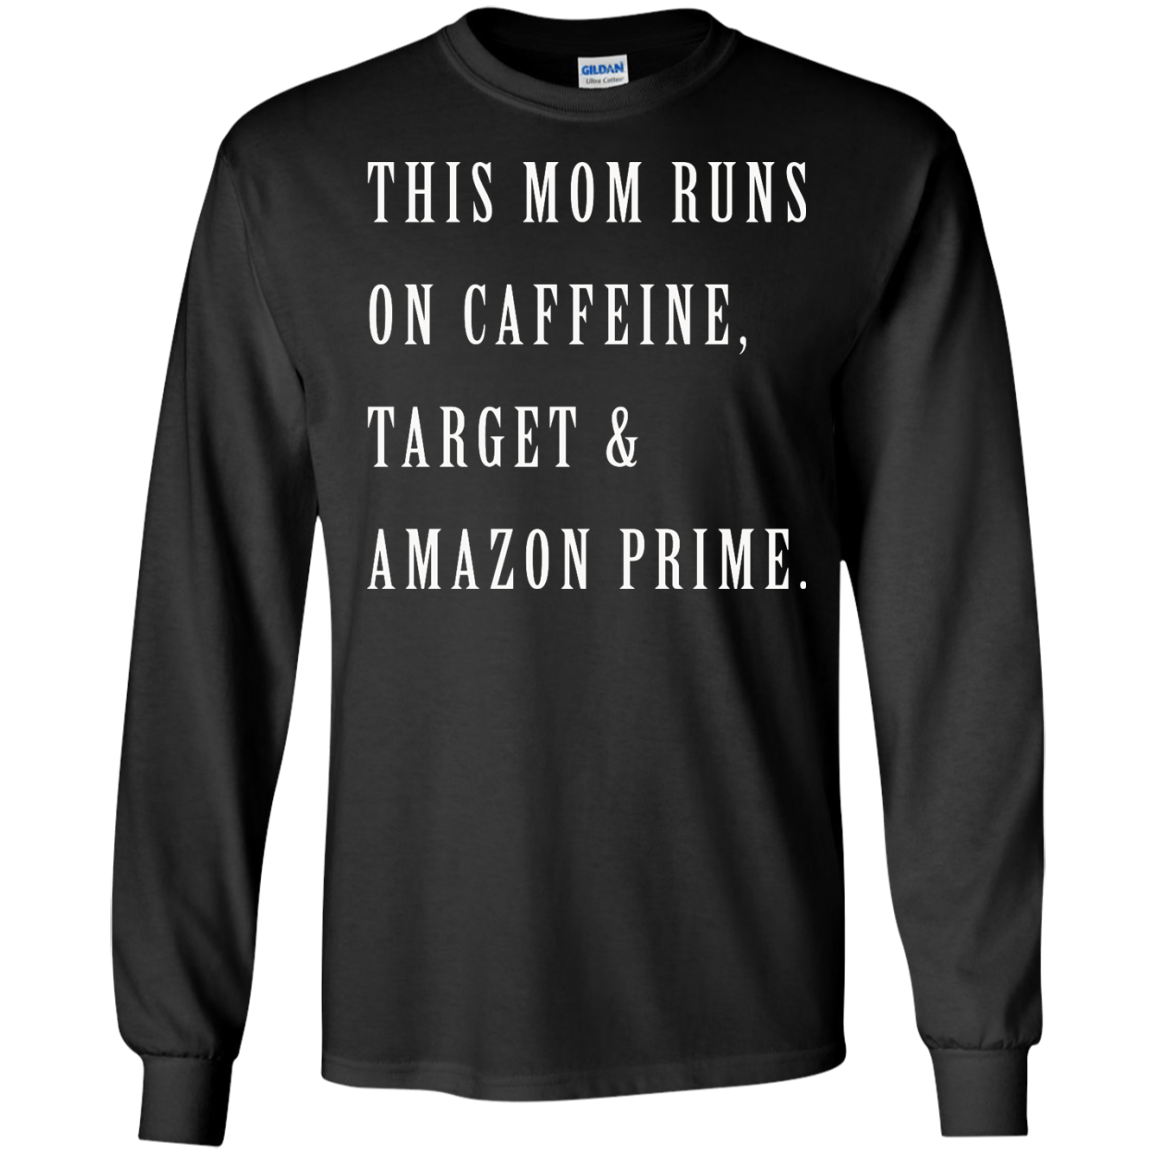 This Mom Runs on Caffeine Target and Amazon Prime shirt, tank, racerba